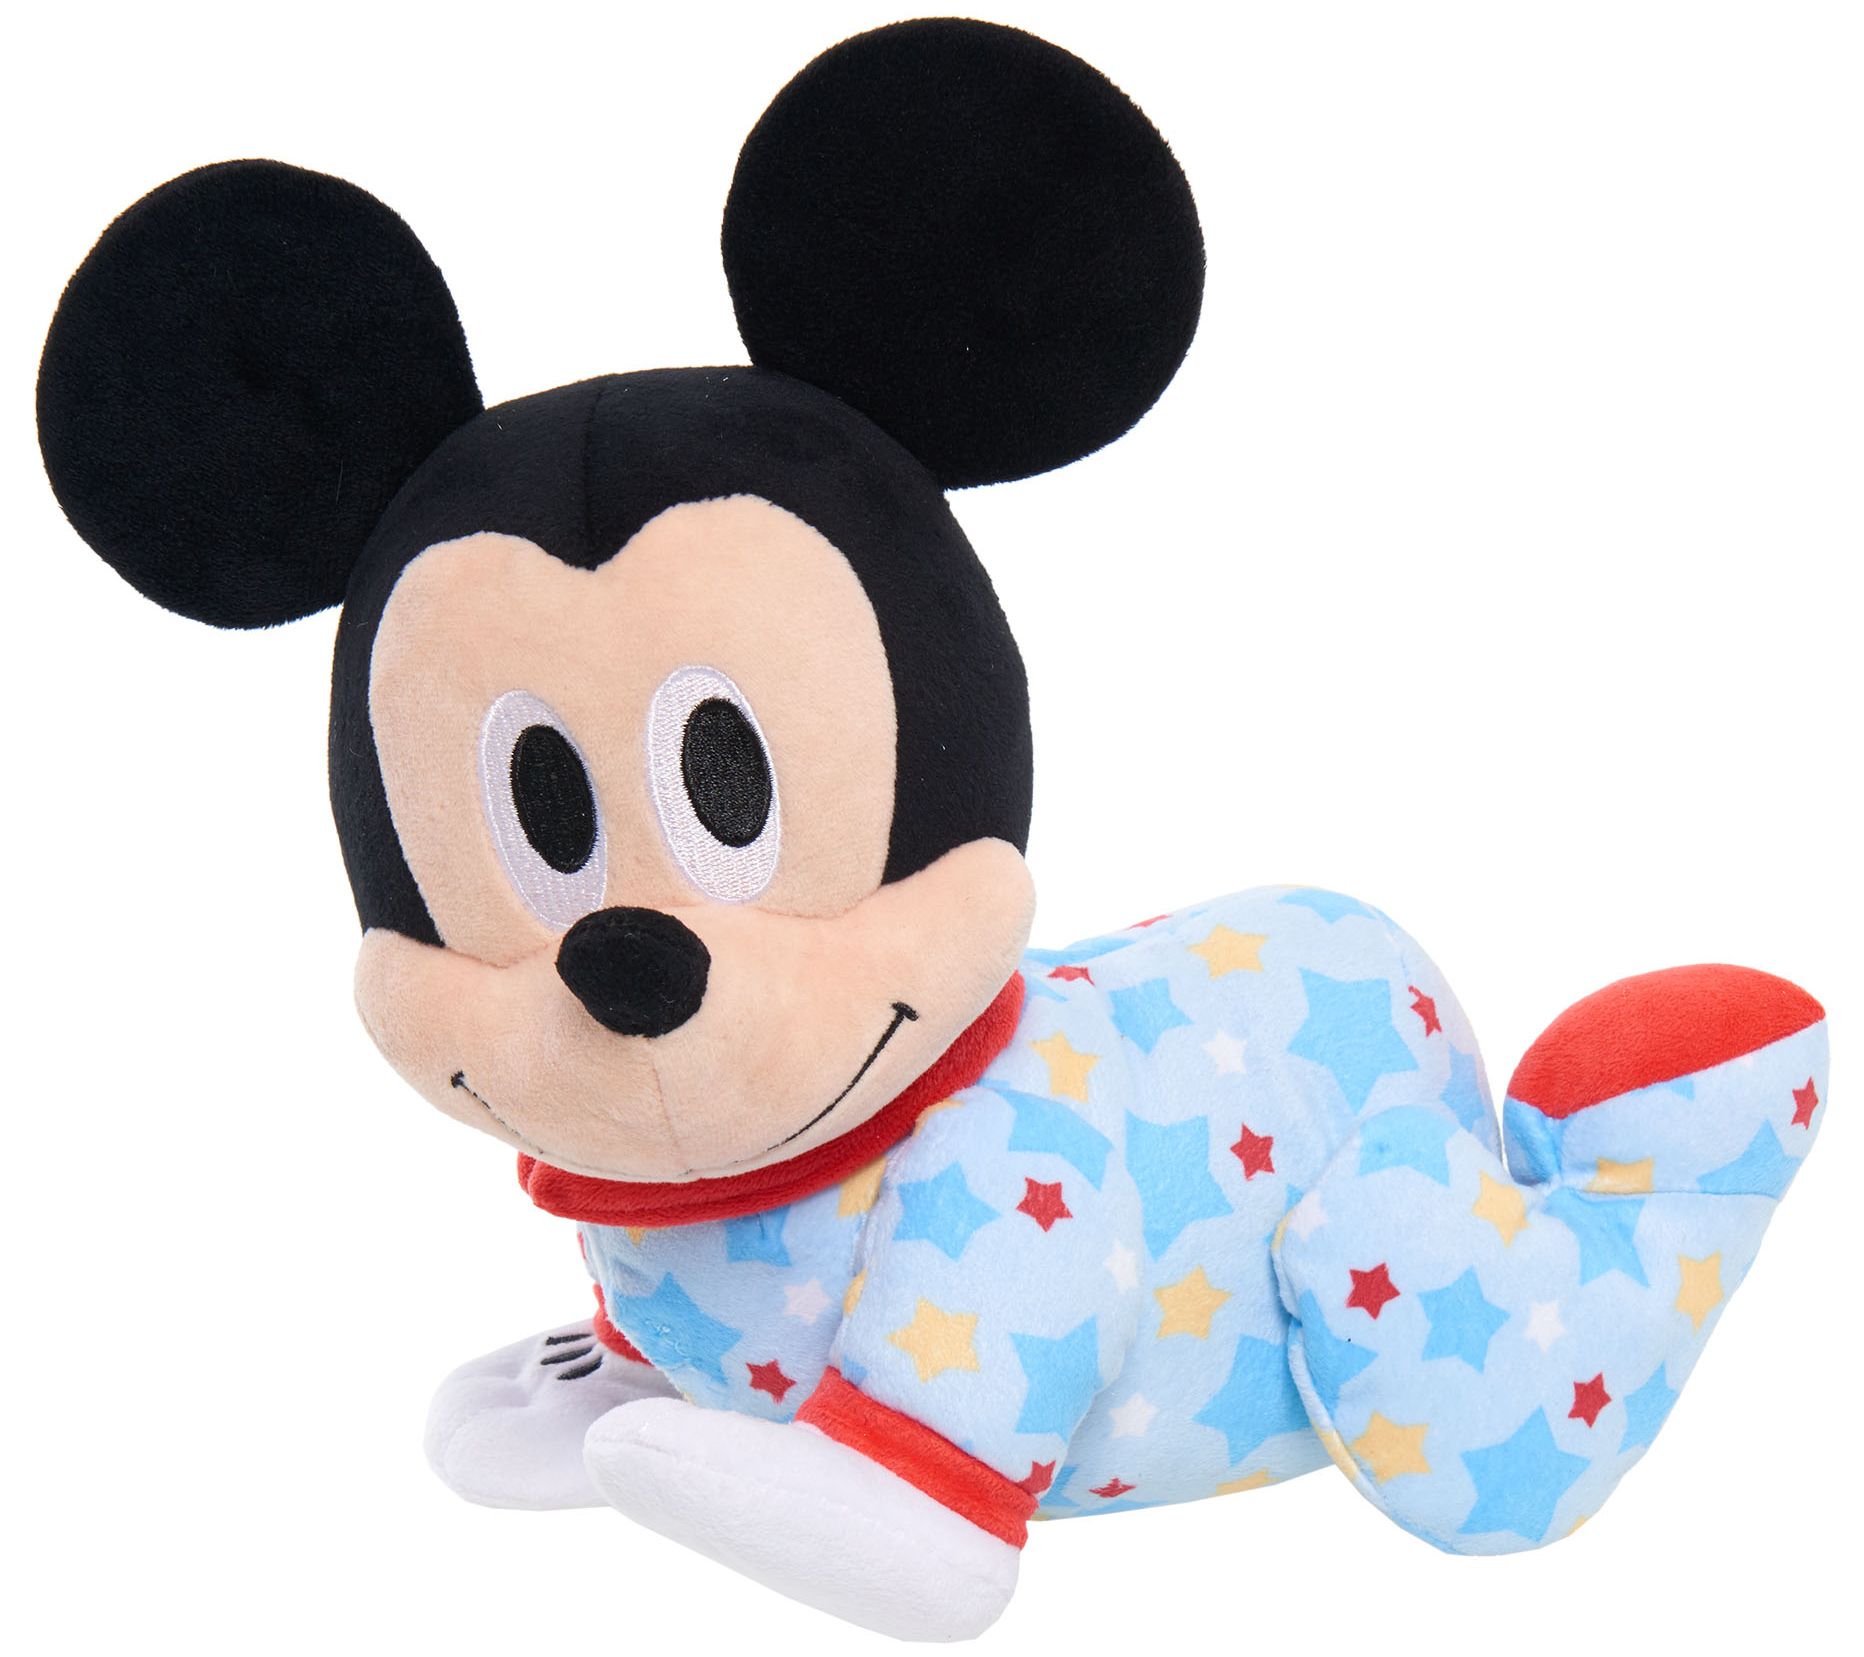 Stuffed Animal Interactive Crawling Plush Minnie Mouse Just Play Disney Baby Musical Crawling Pals Plush 